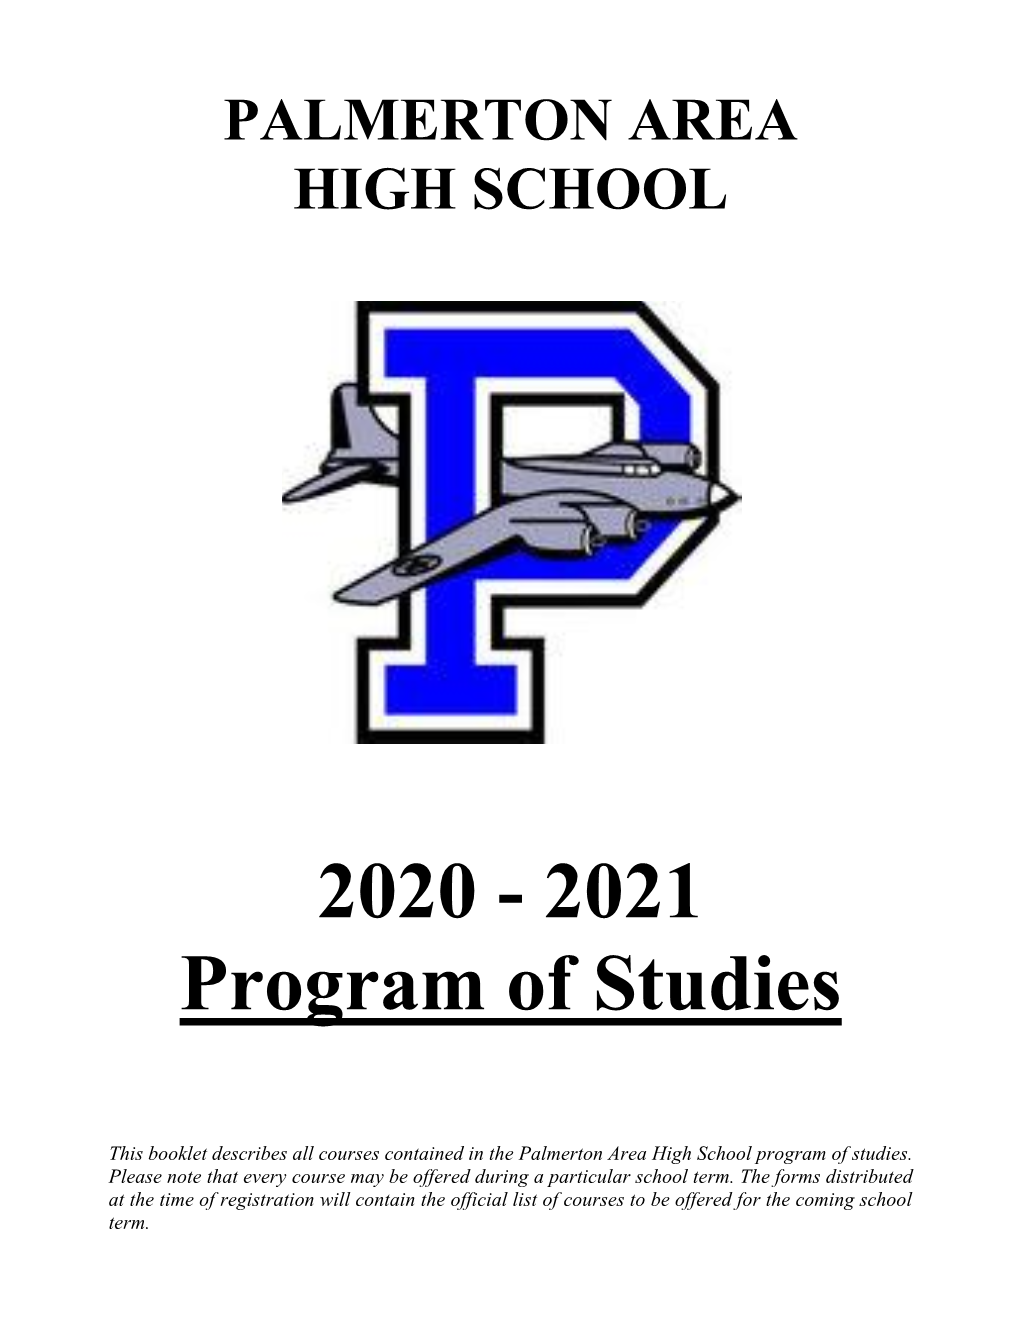 2020 - 2021 Program of Studies